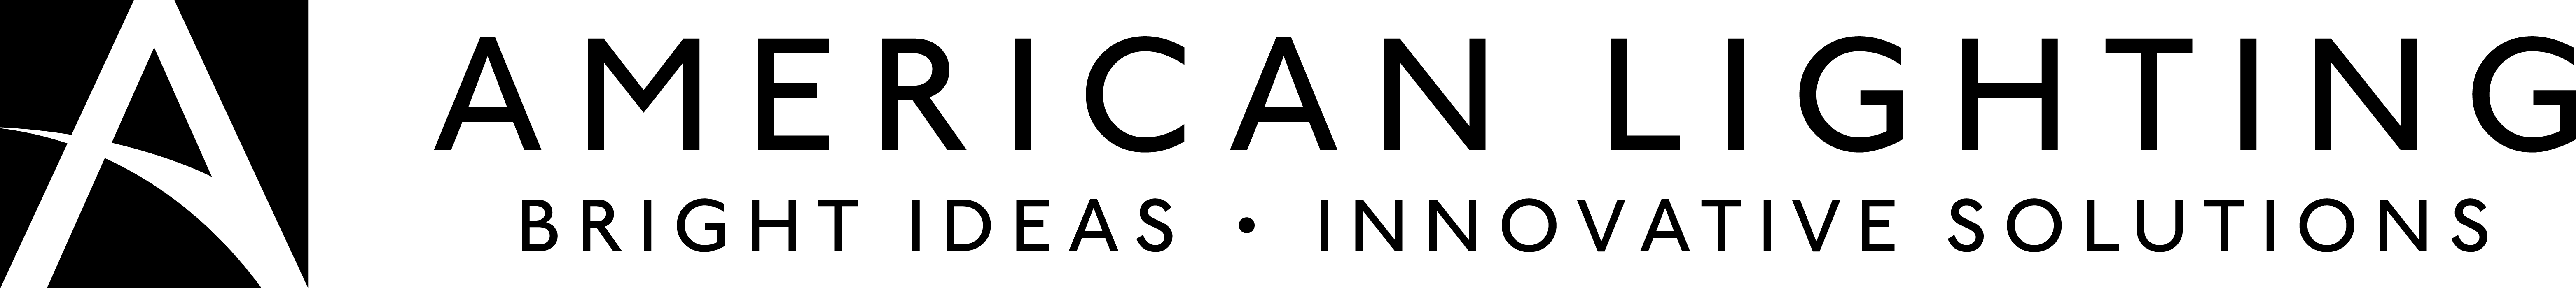 American Lighting Logo